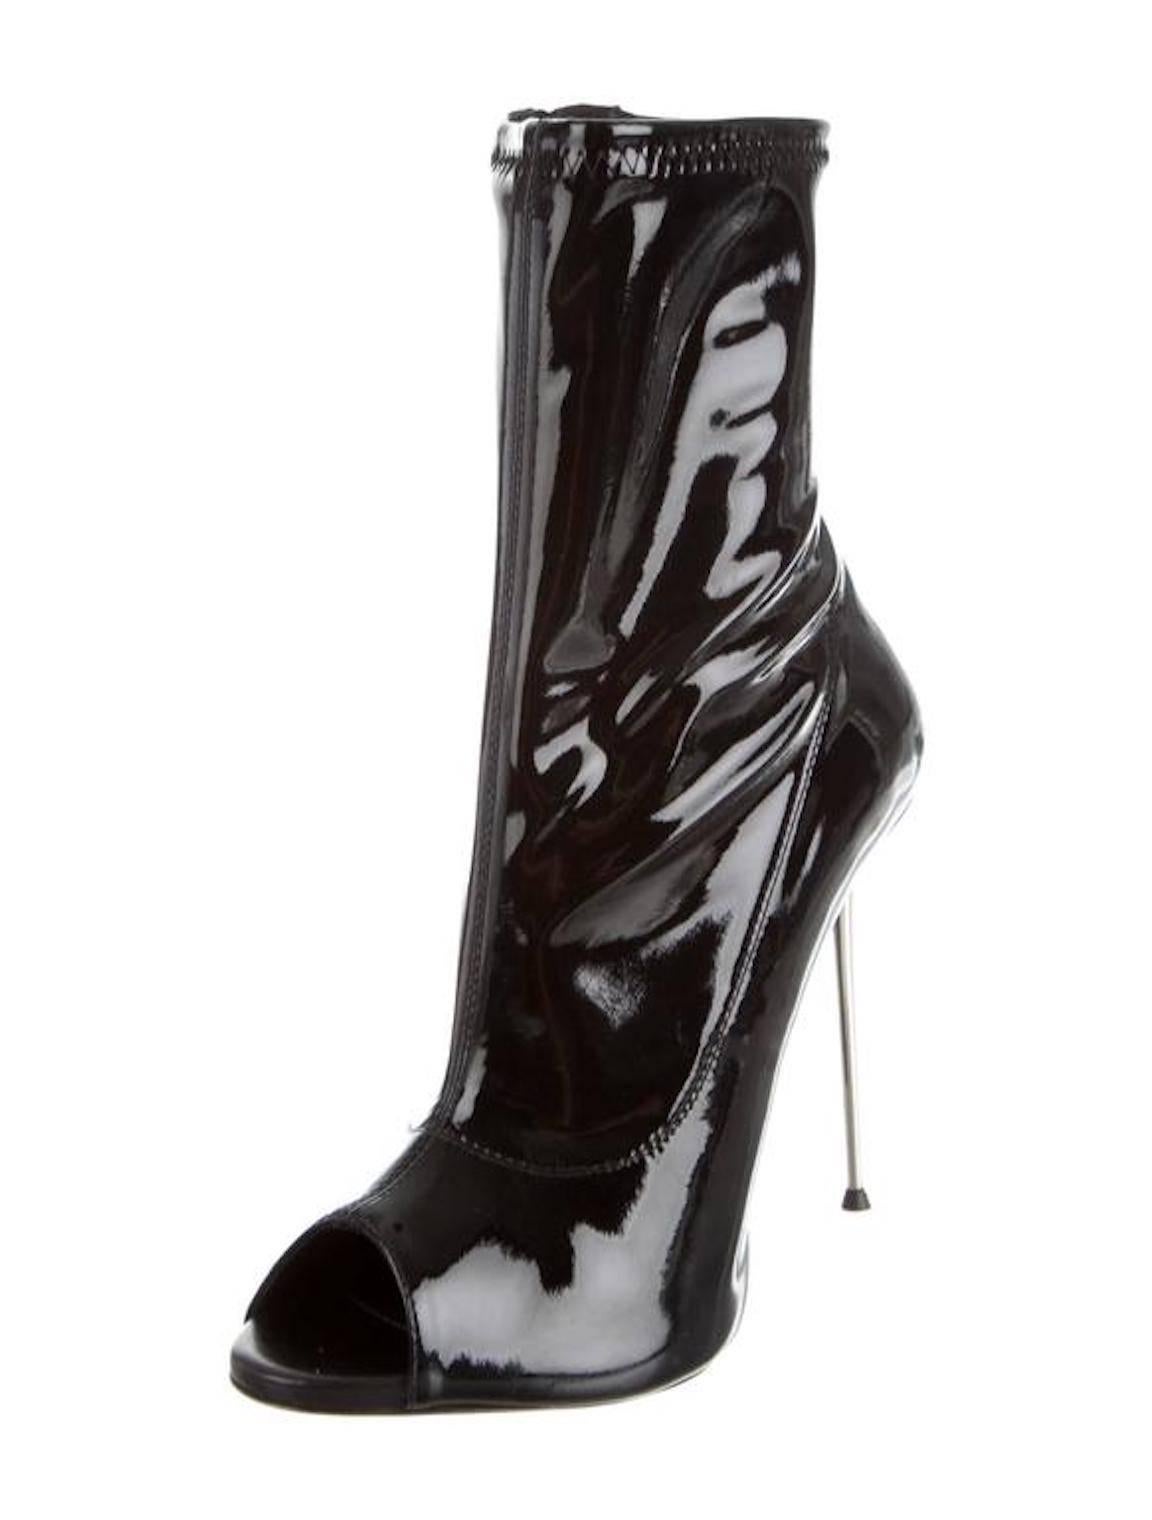 Women's Giuseppe Zanotti New Black Patent Metal Heels Ankle Booties in Box